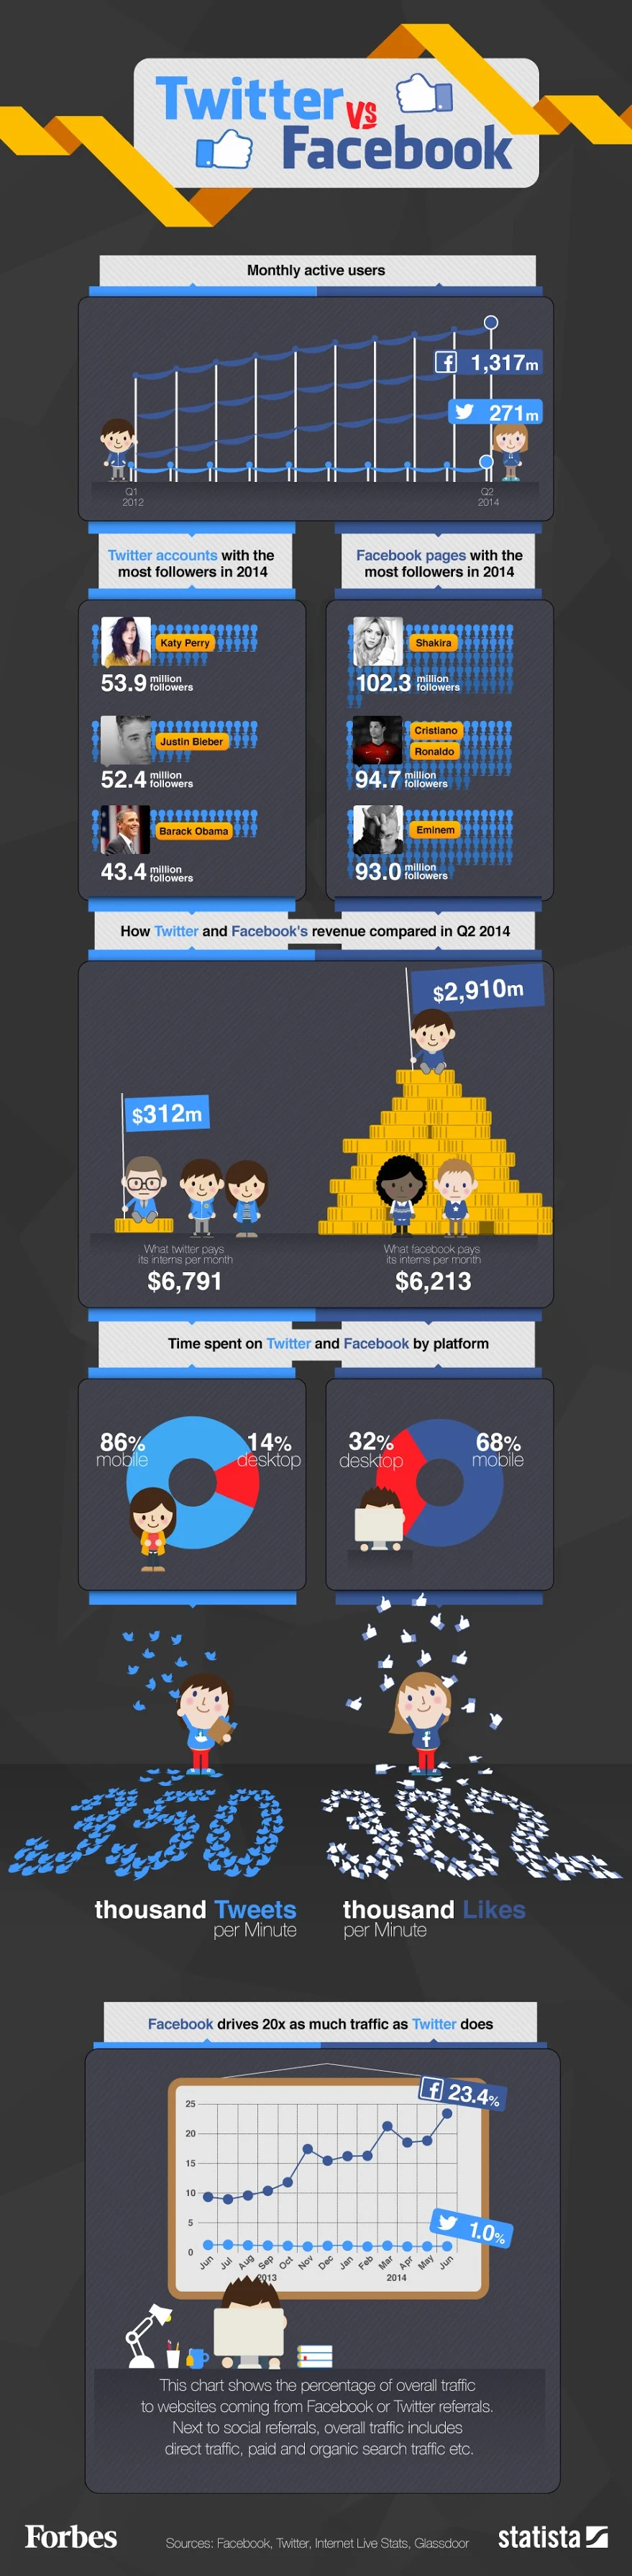 Facebook Vs Twitter In Numbers - #infographic #socialmedia